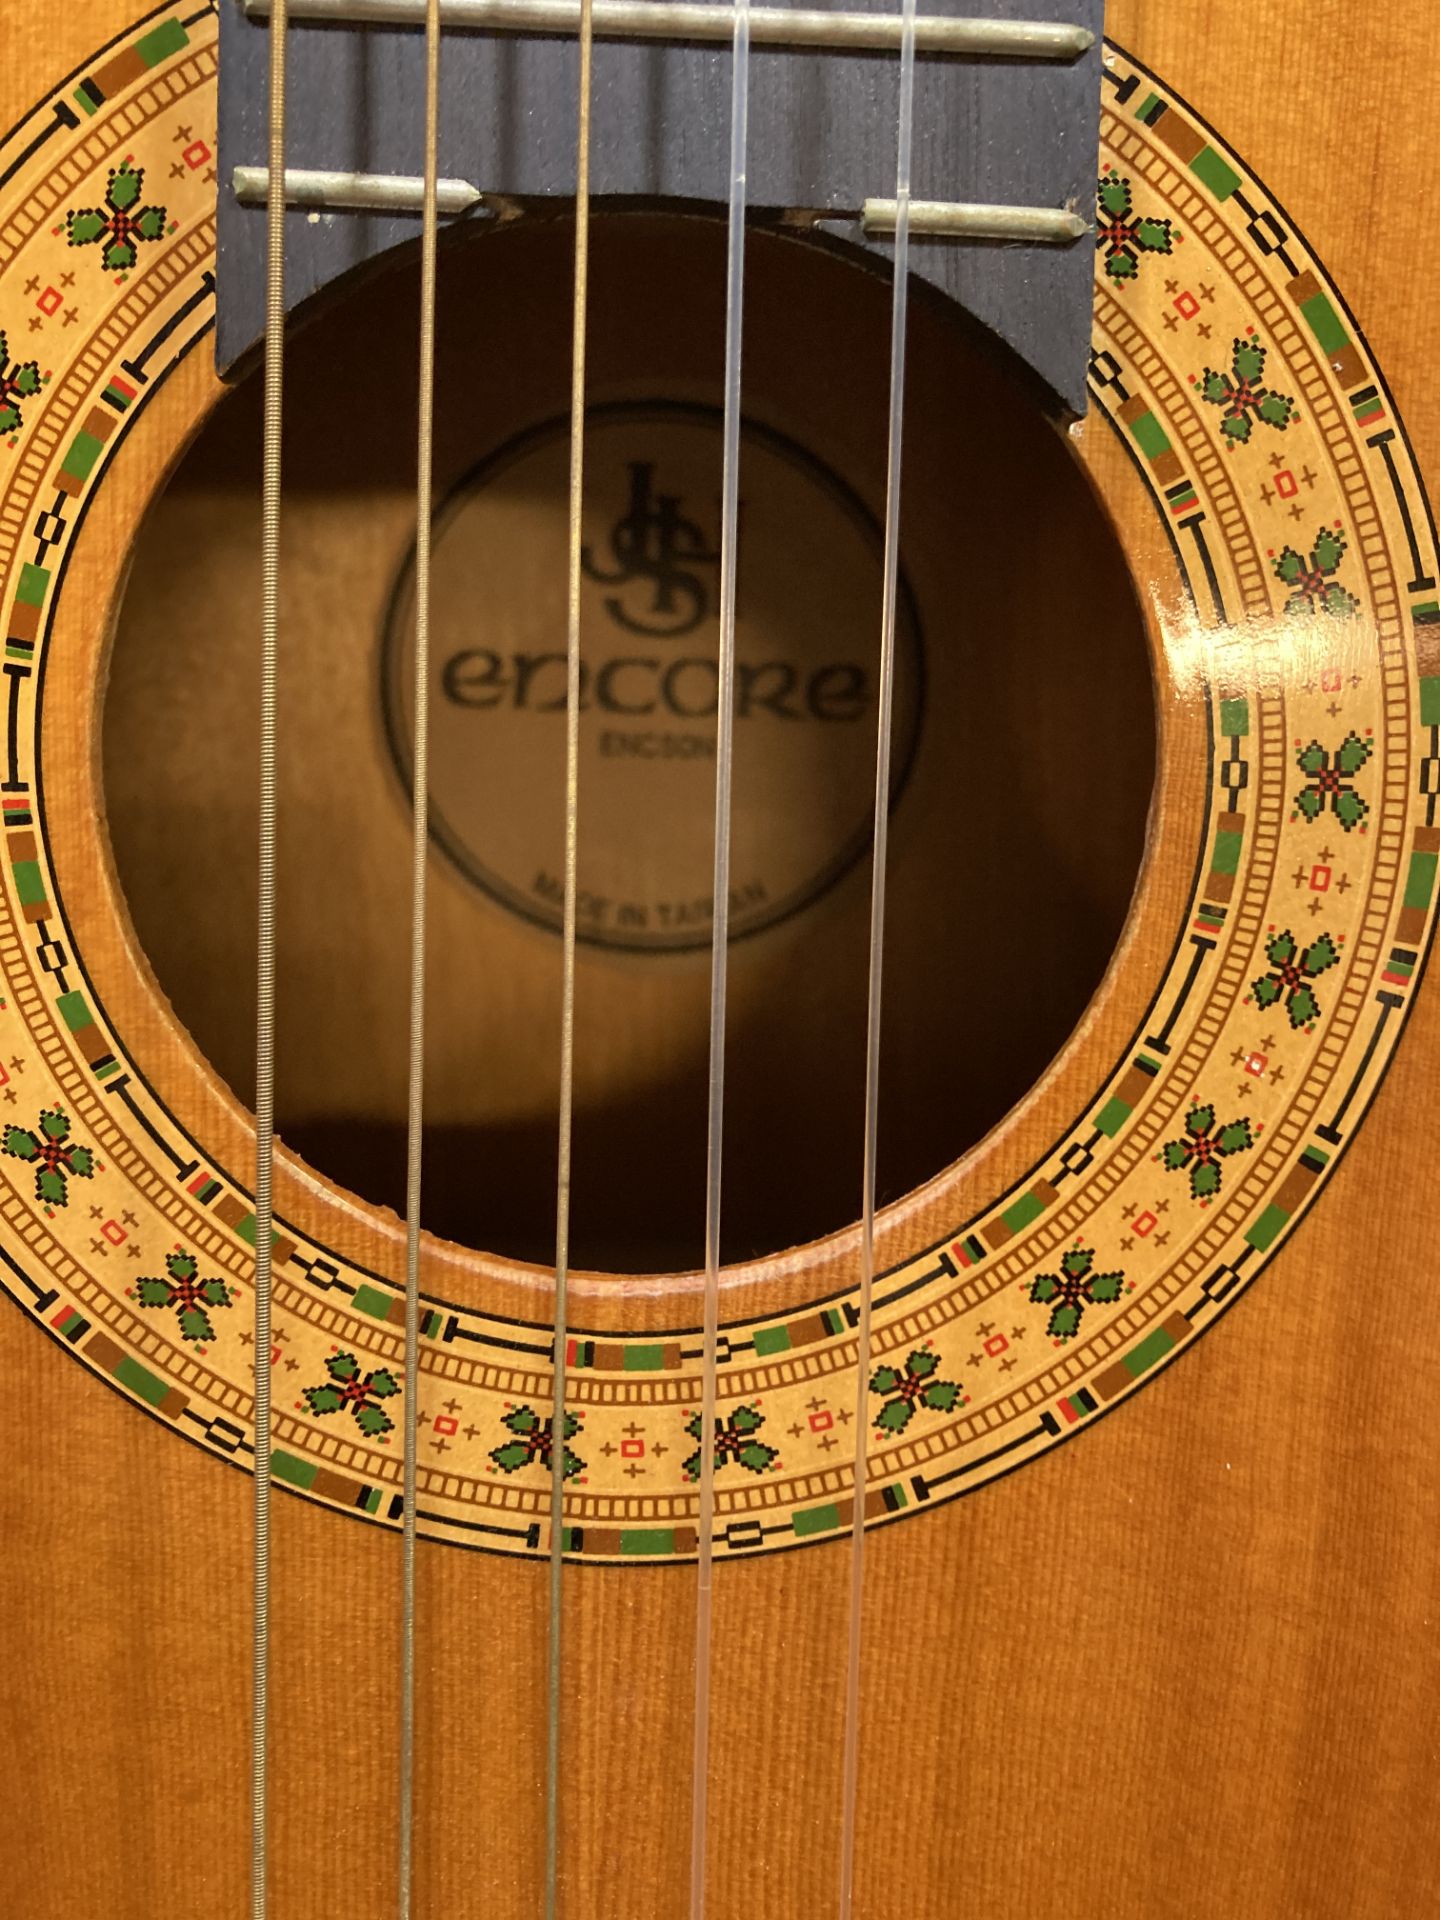 Encore 6-String Acoustic Guitar | See Description - Image 3 of 5